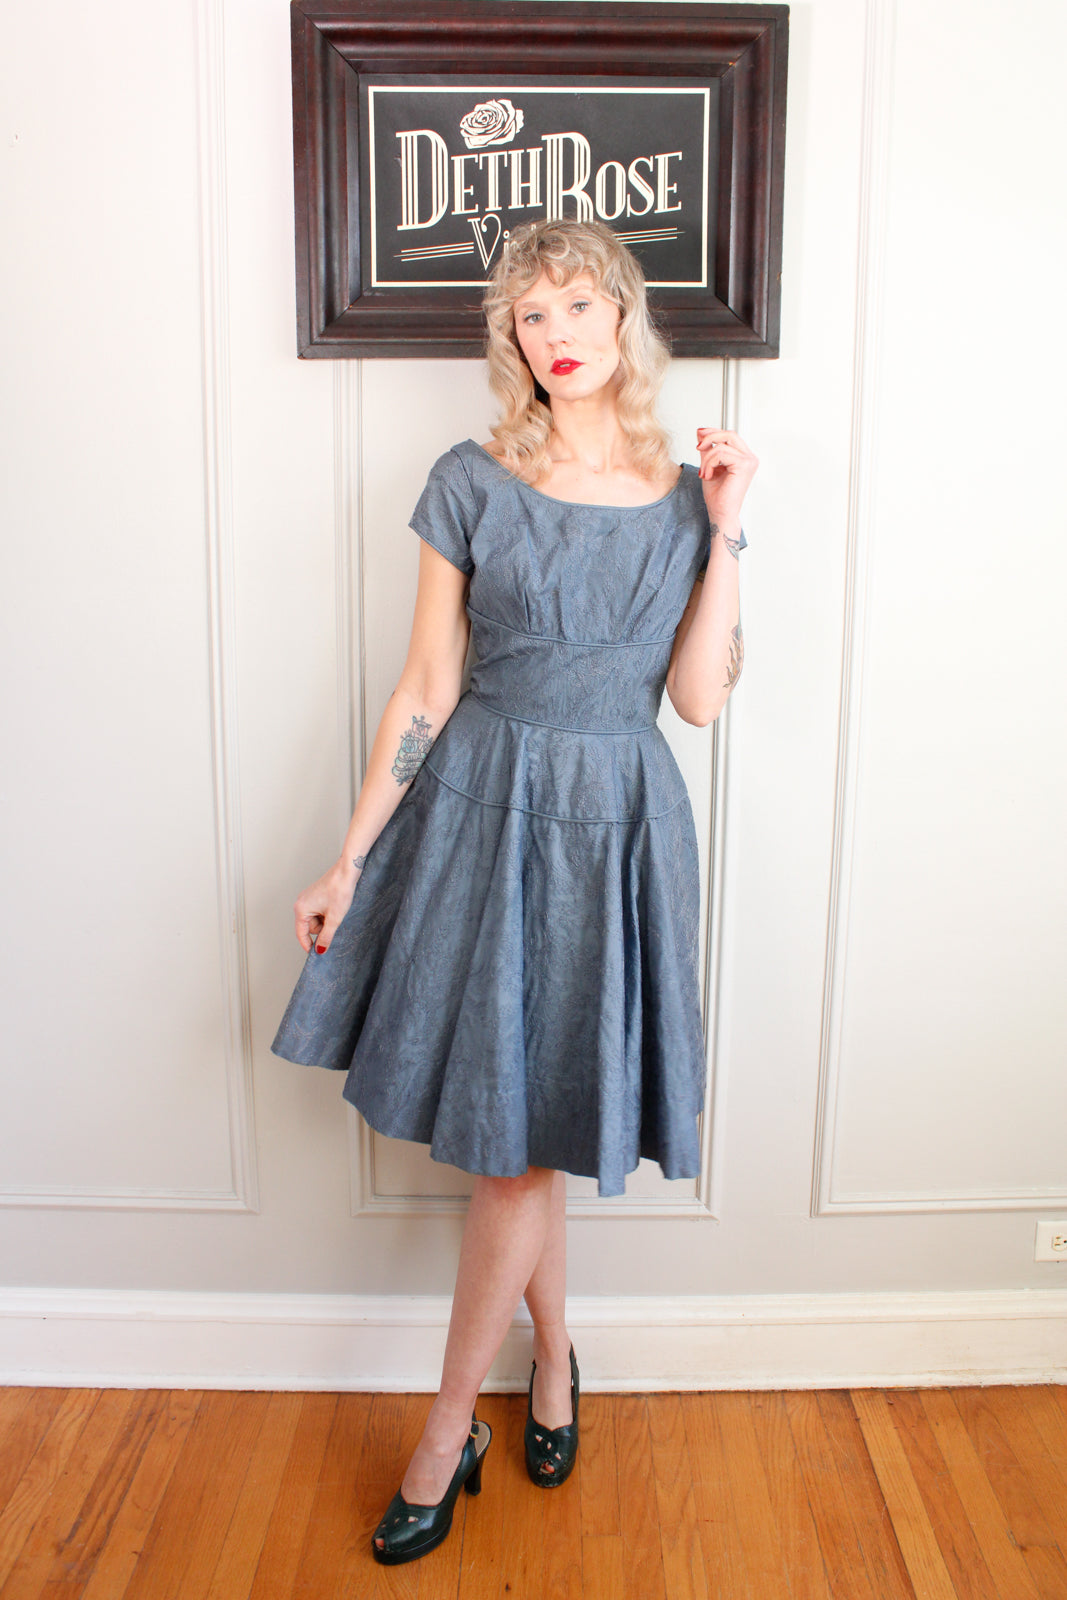 1950s Storm Blue Lace Taffeta Dress - Small